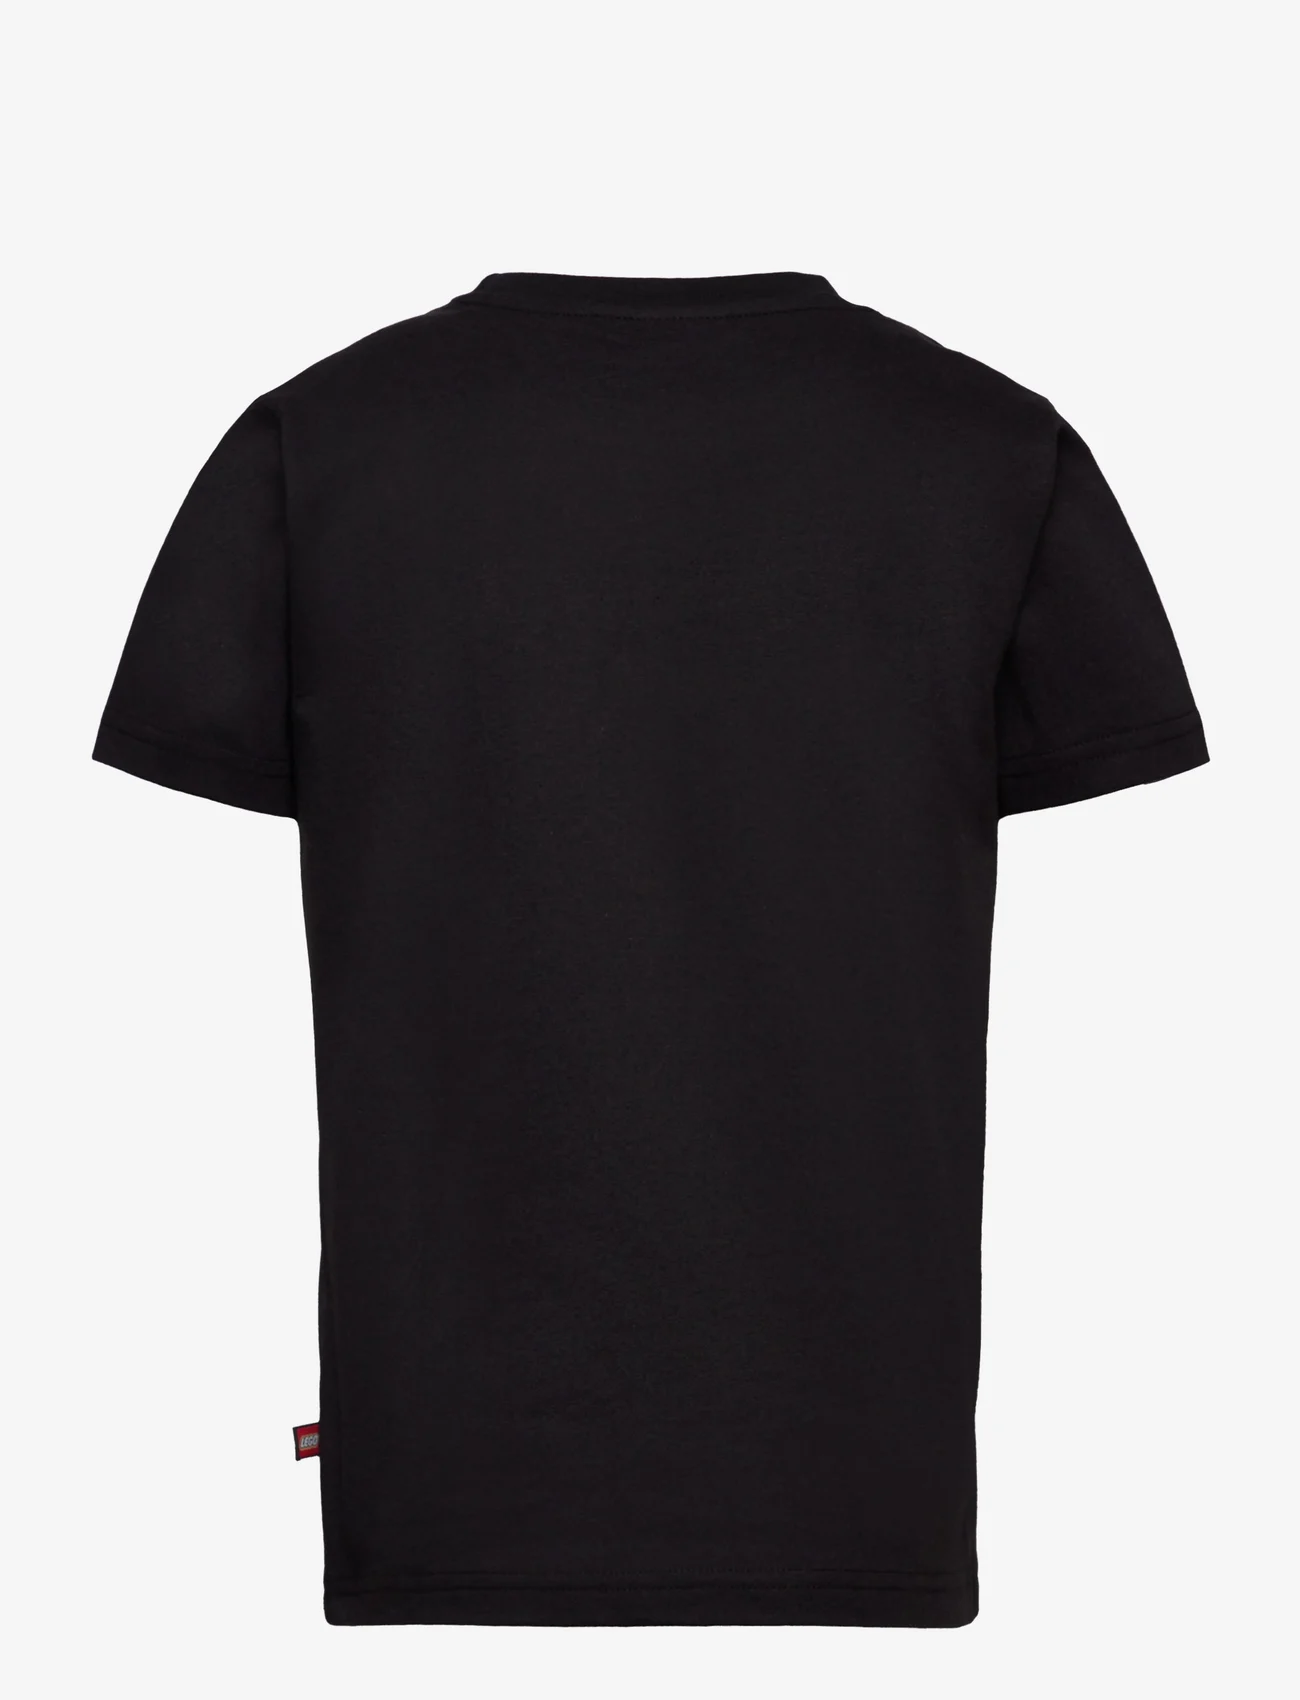 LEGO kidswear - LWTAYLOR 332 - T-SHIRT S/S - short-sleeved t-shirts - black - 1